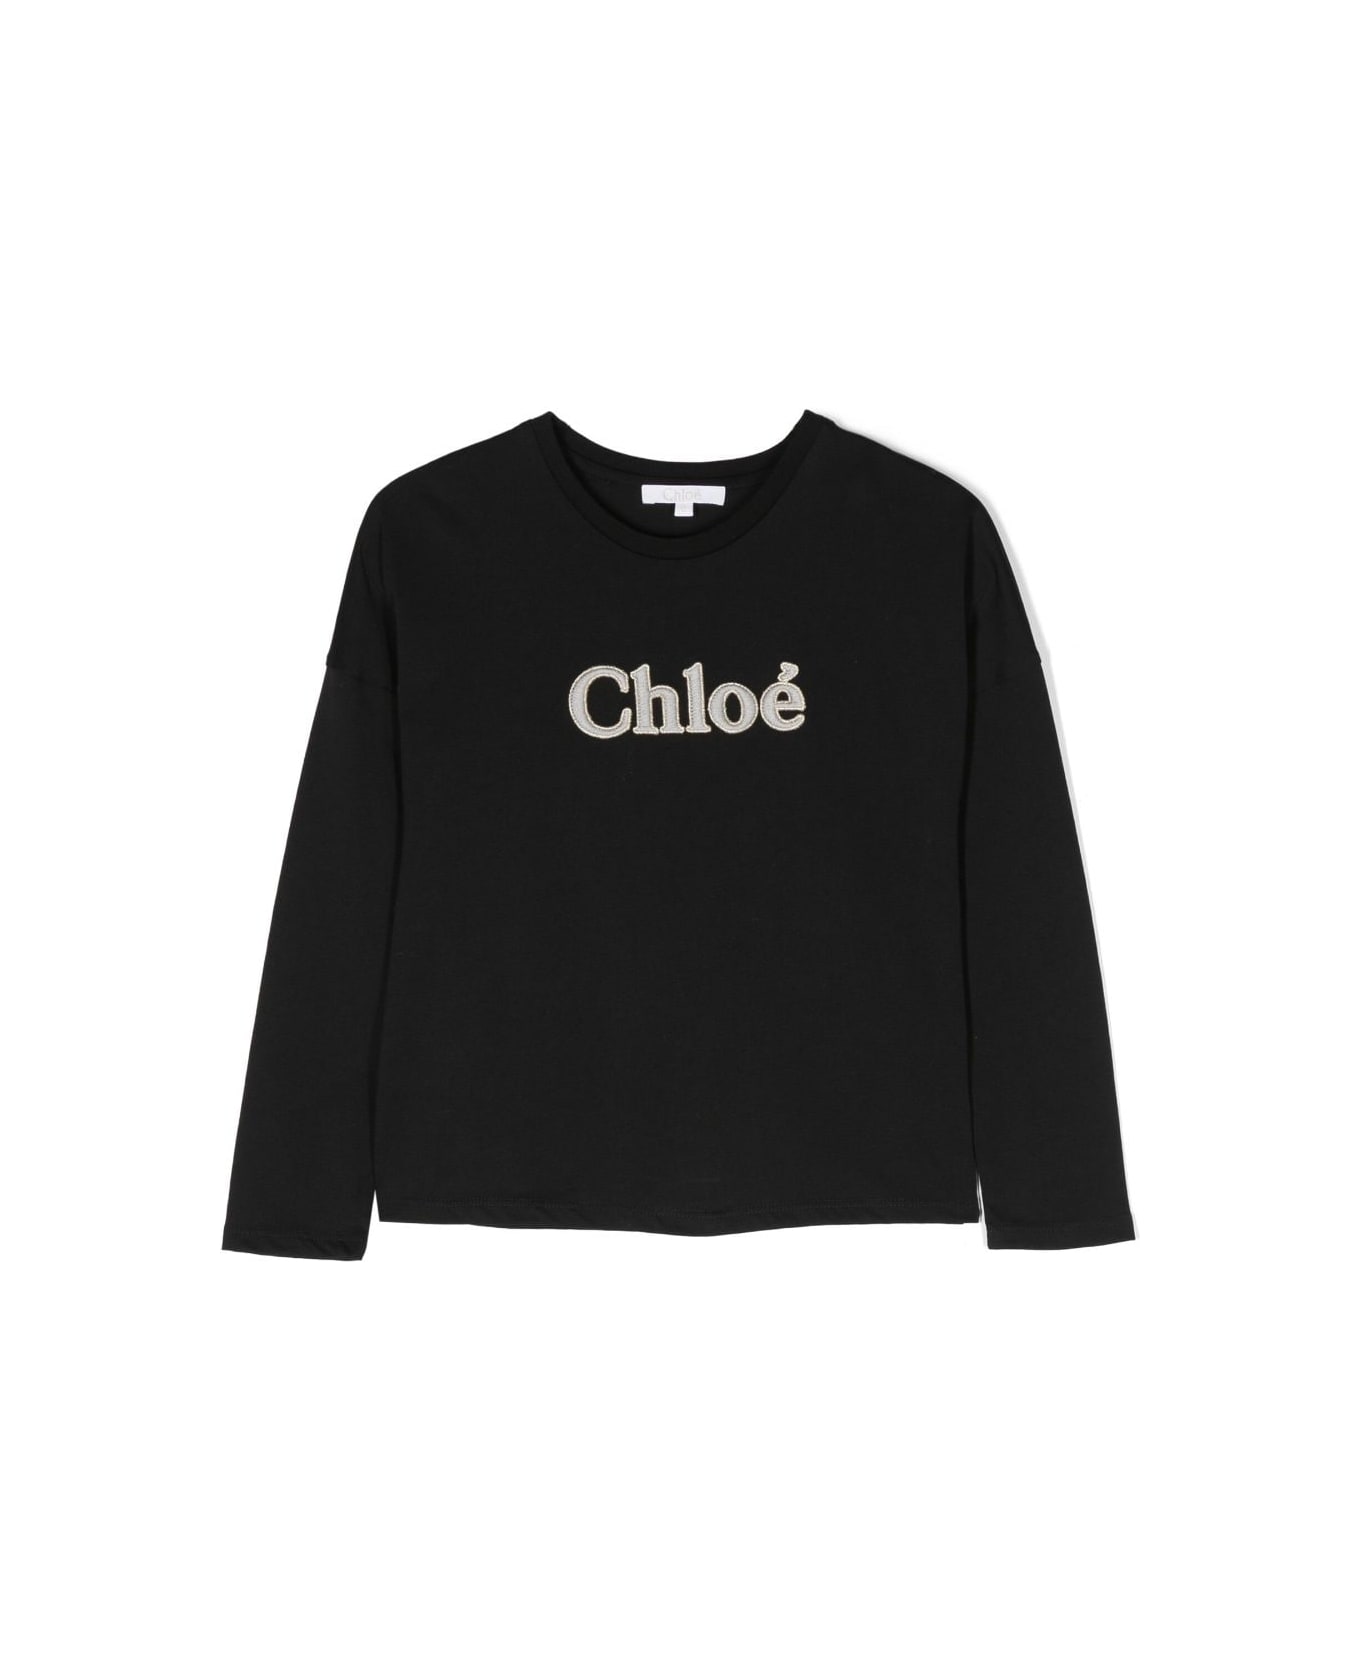 Chloé Chloe T-shirt Nera In Jersey Di Cotone Bambina - Nero